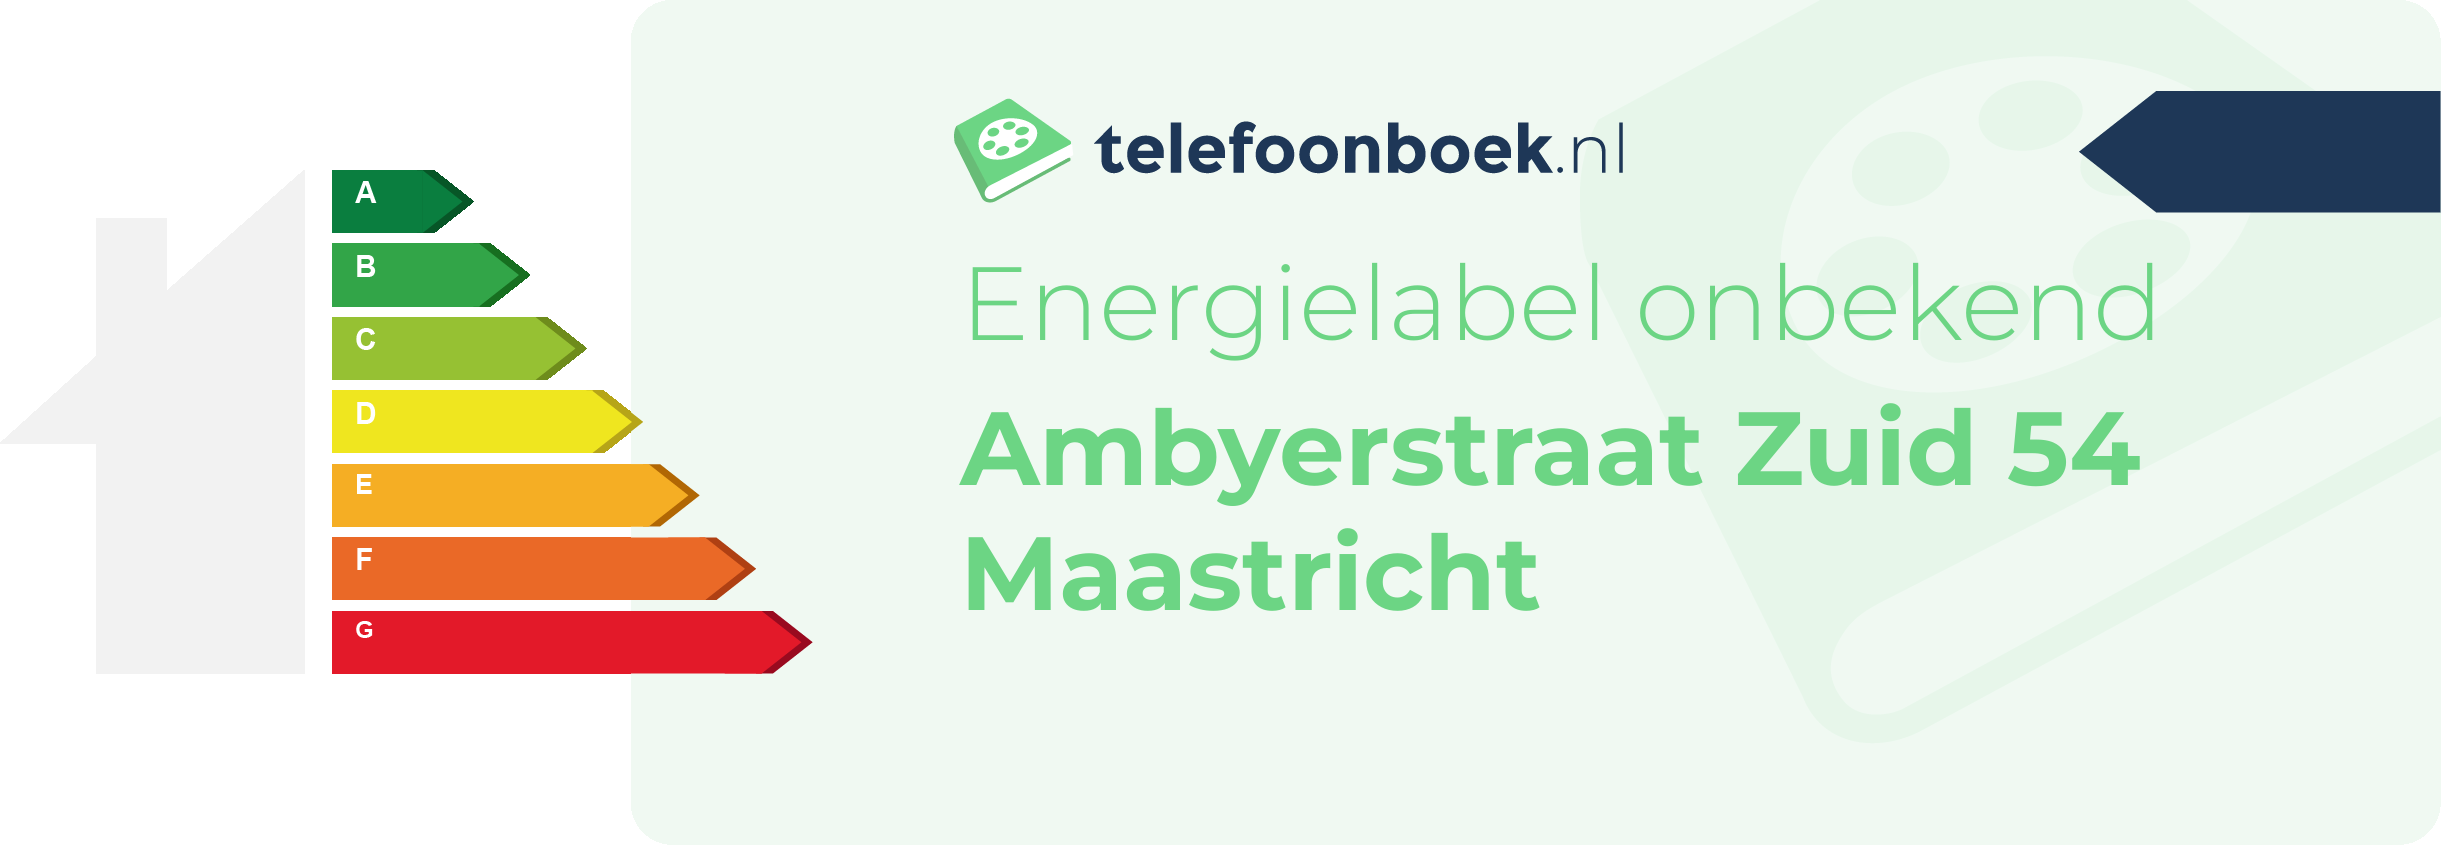 Energielabel Ambyerstraat Zuid 54 Maastricht